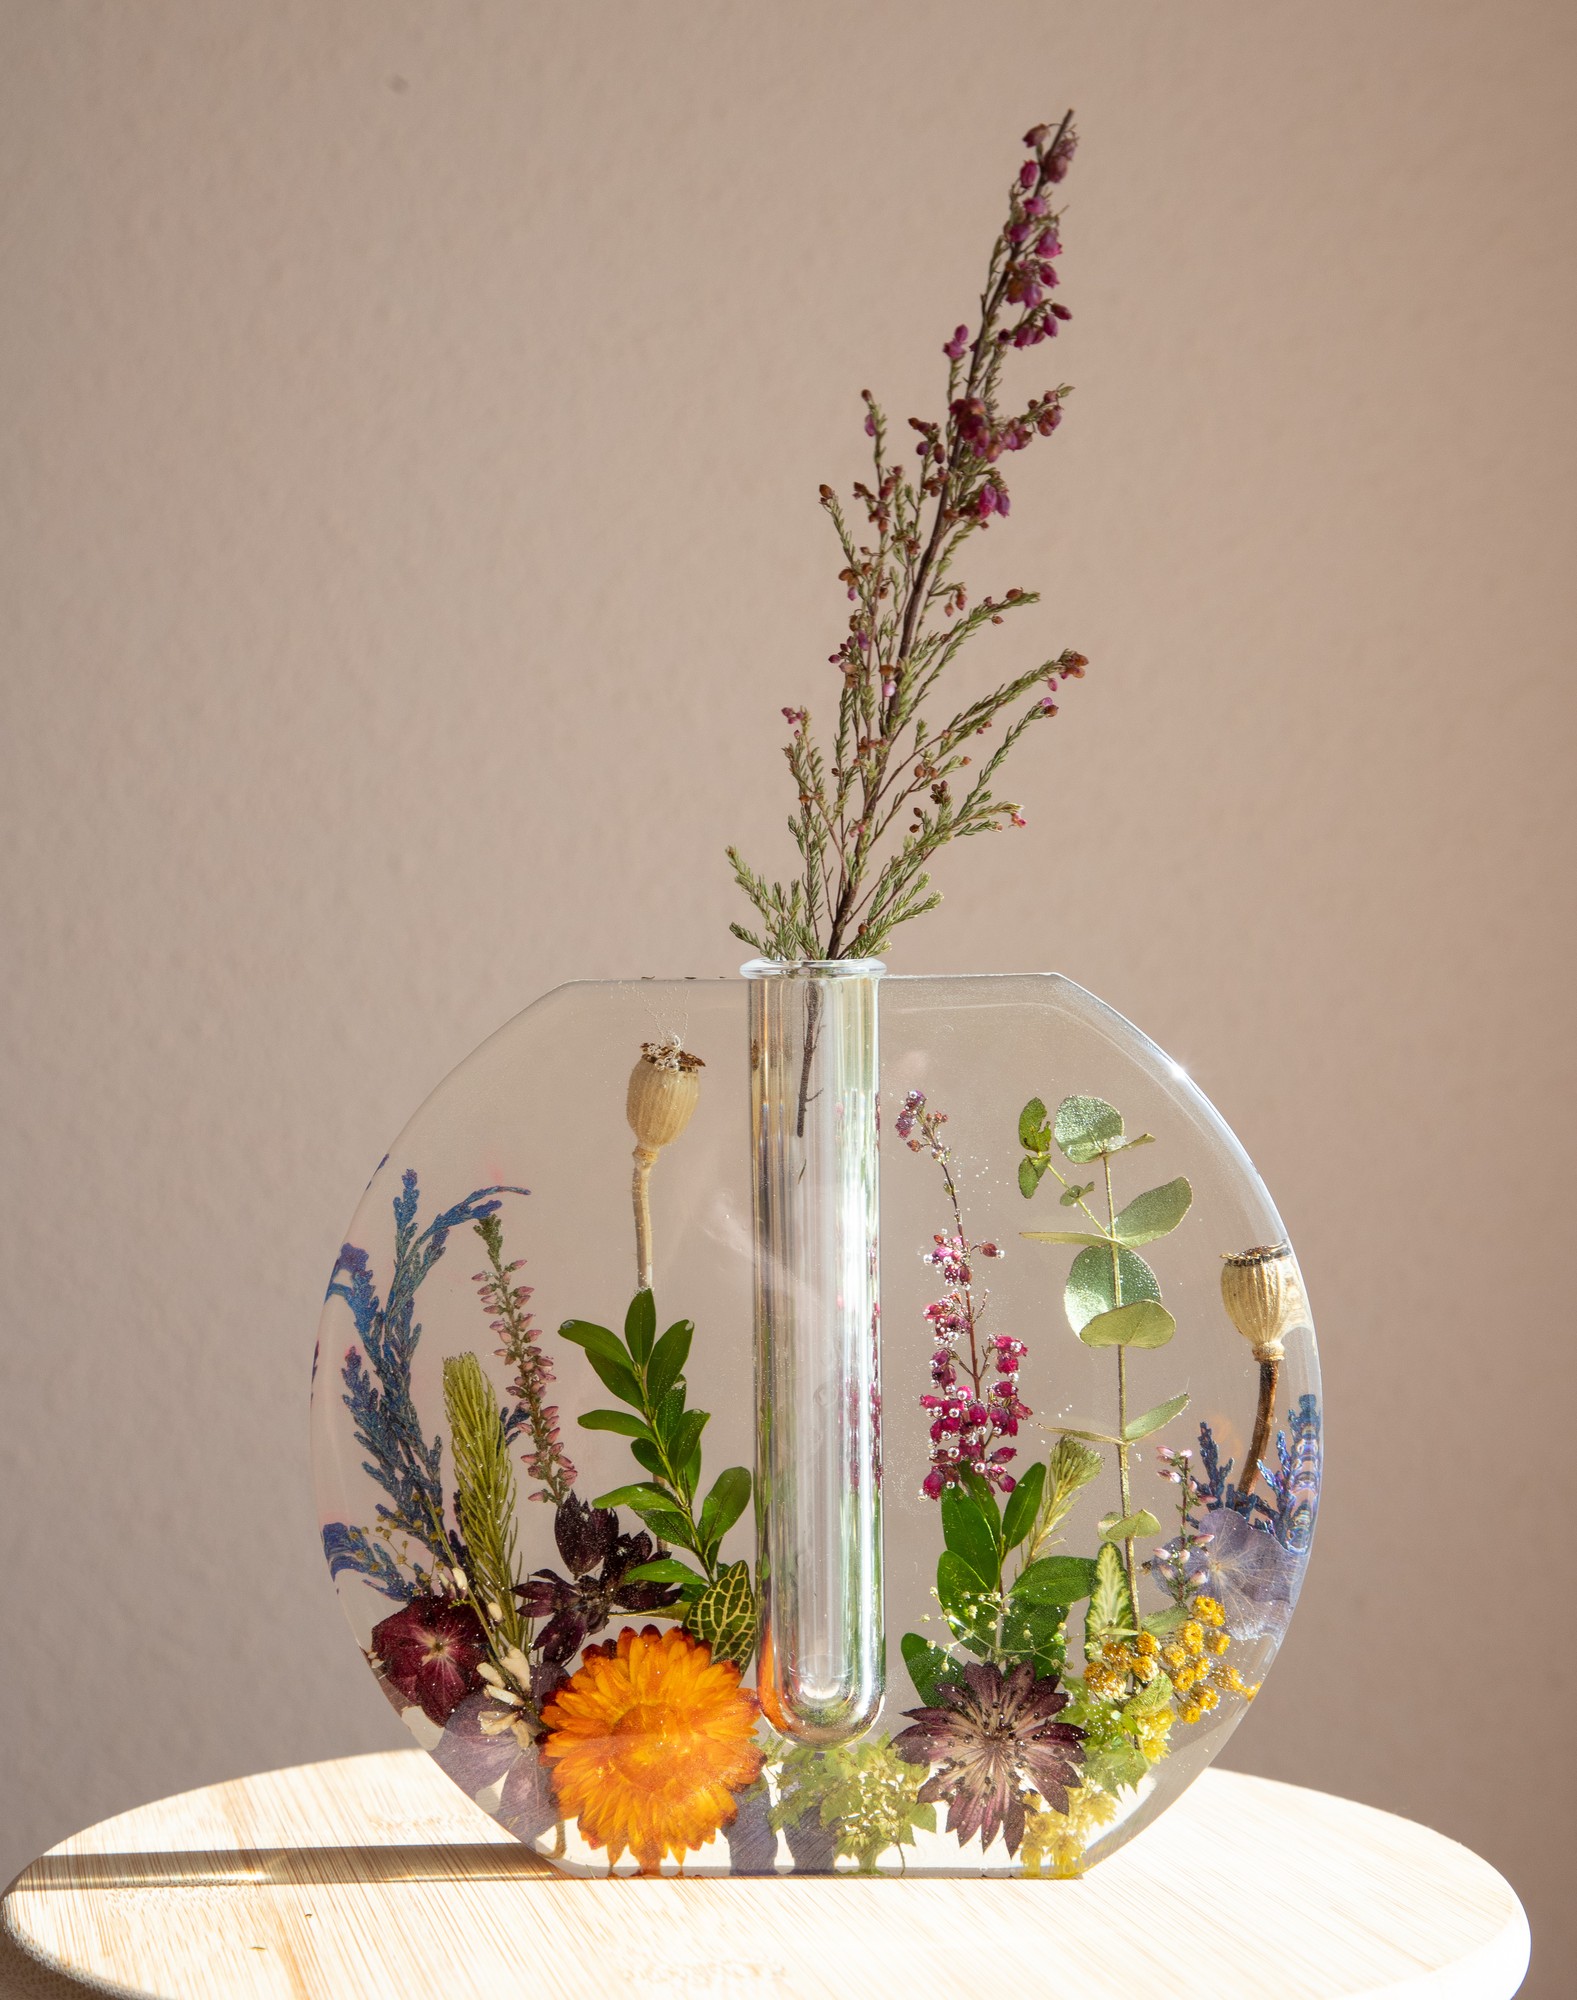 Resin vase with pressed flowers, Home decor vase, Handmade colorful vase